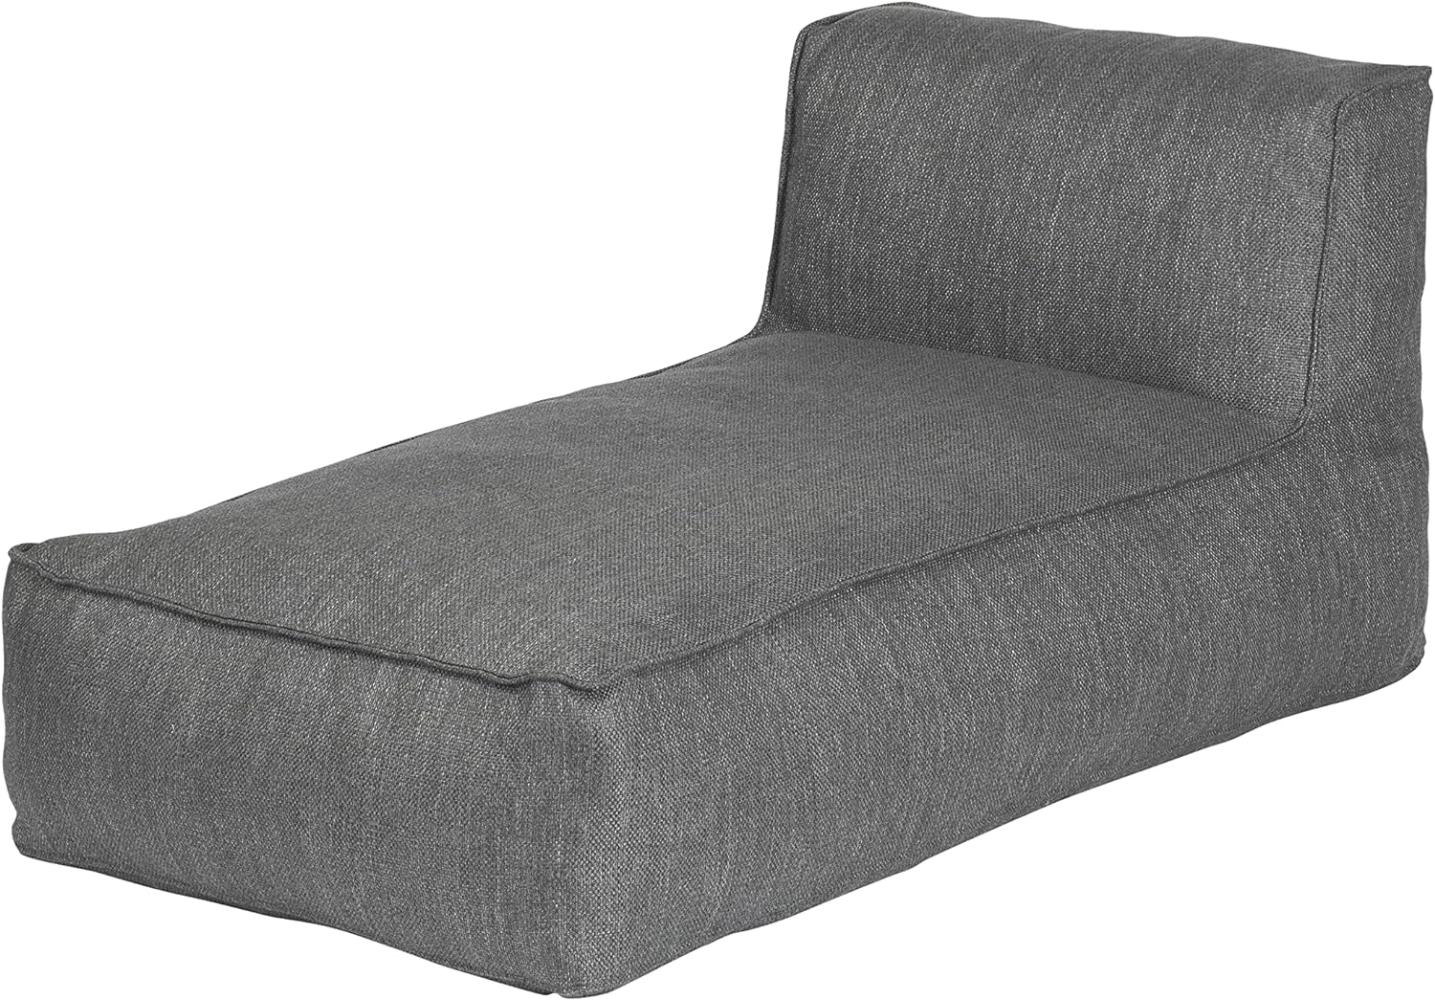 Outdoor Chaiselongue GROW Relax-Sofa Unit 4 (coal ohne Schutzhülle ohne Bodenplatte) Bild 1